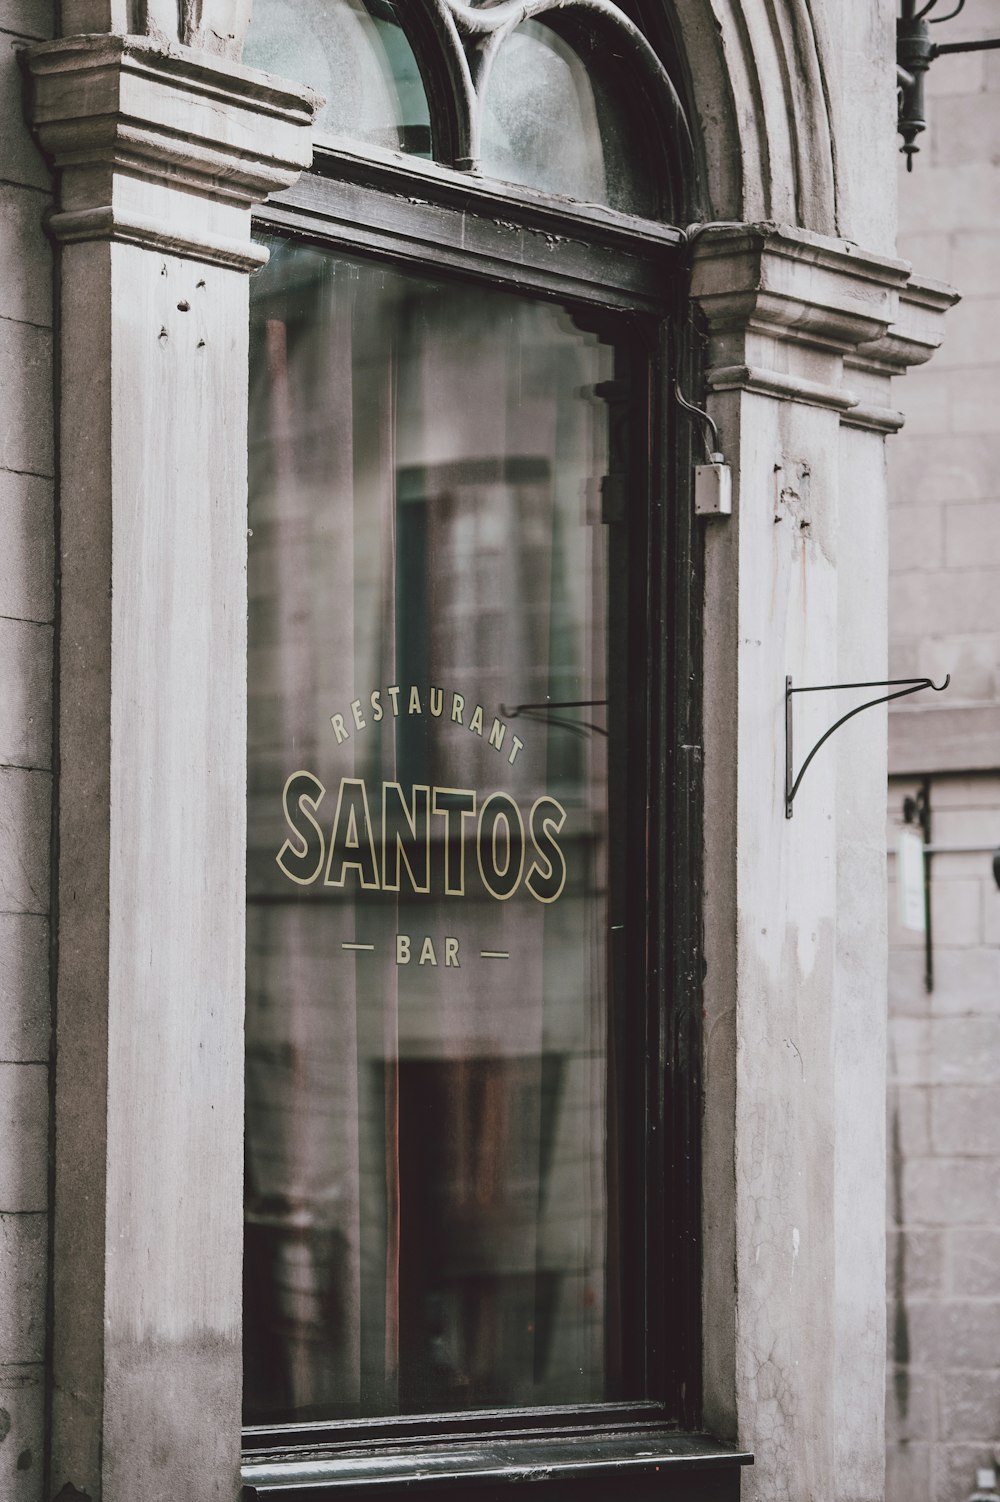 closed Restaurant Santos Bar sign